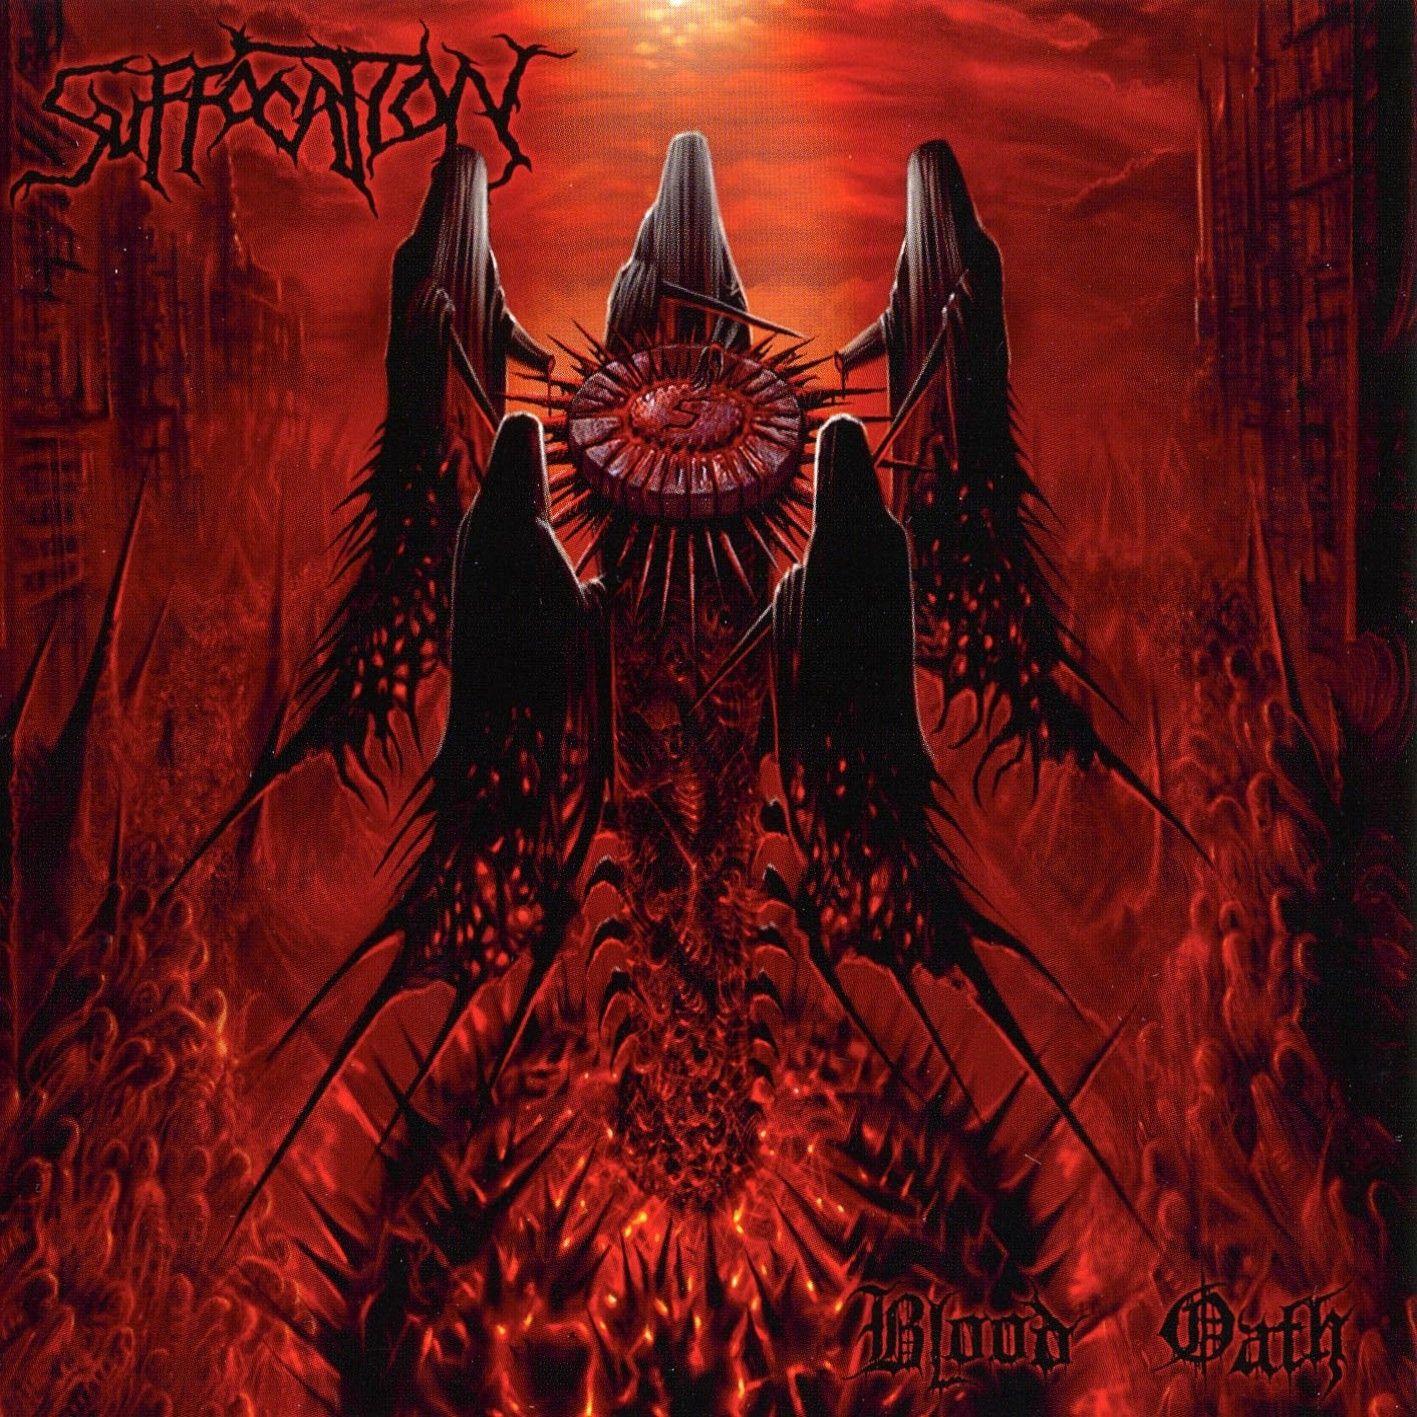 brutal death metal album covers suffocation 1417x1417 wallpaper High